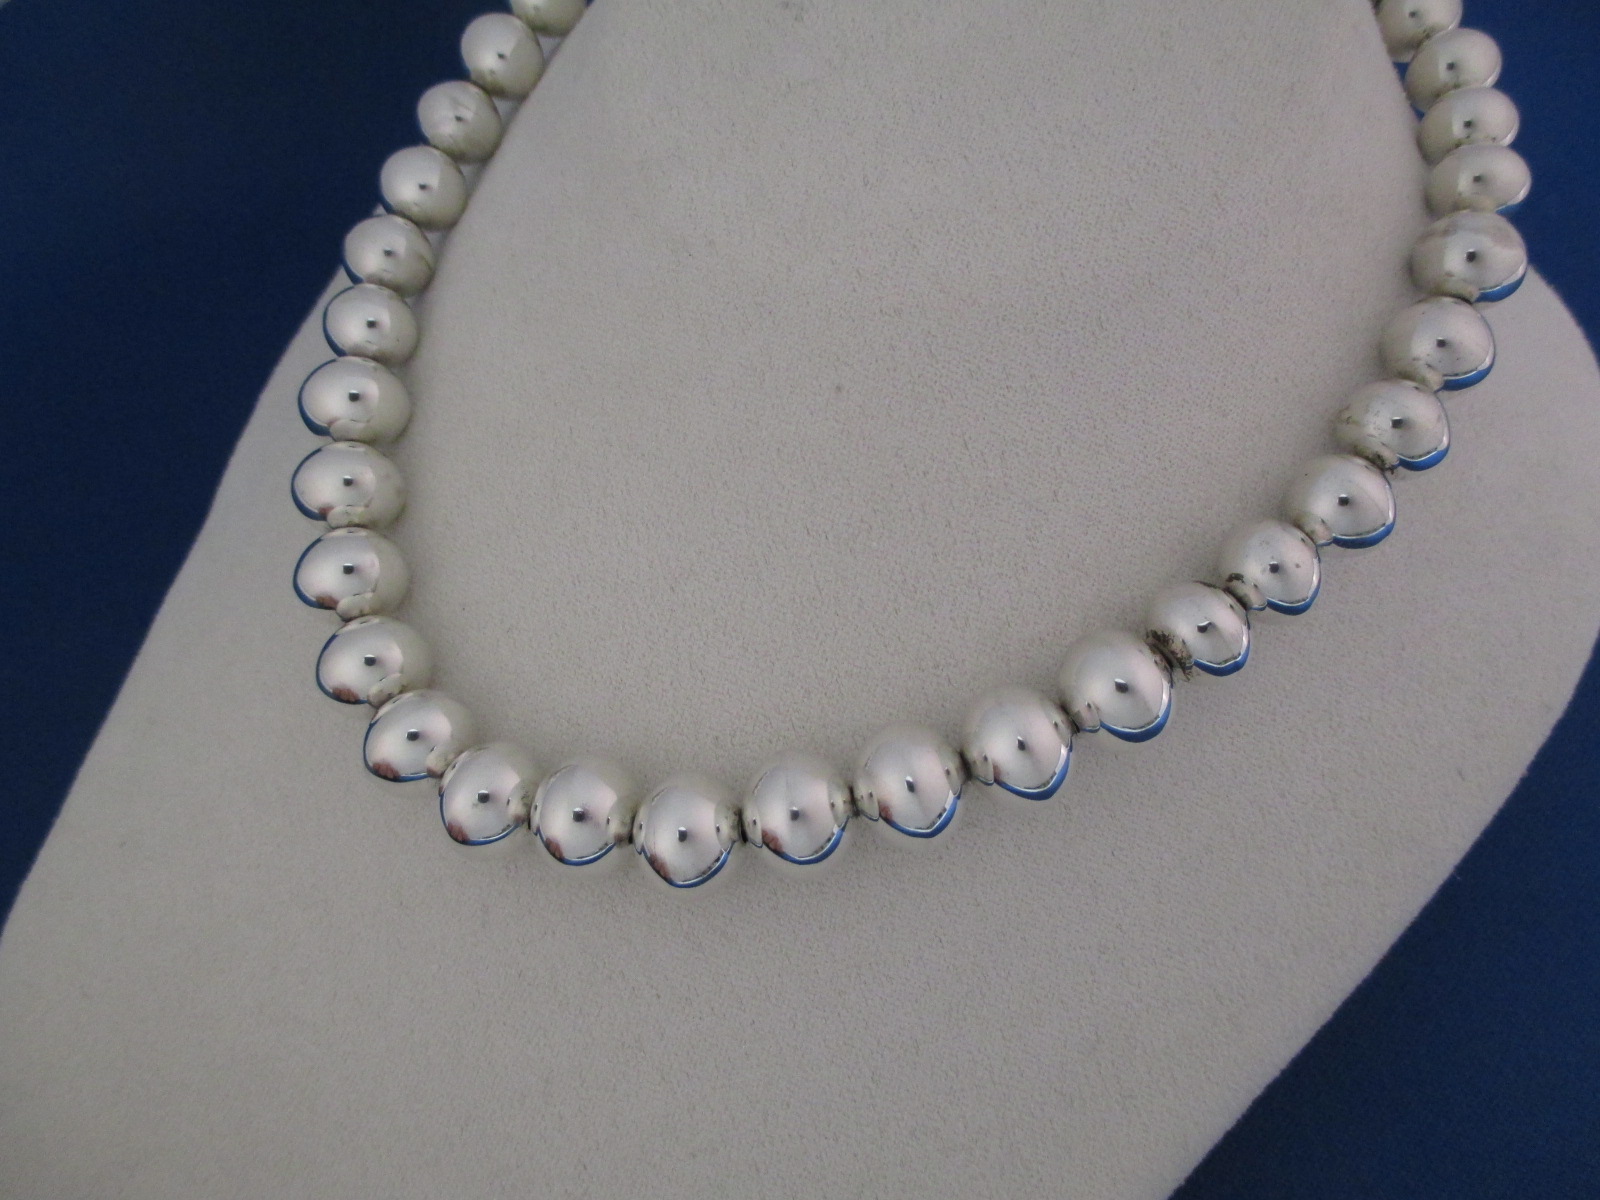 Shorter Sterling Silver Bead Necklace by Navajo jewelry artists, Gene & Martha Jackson $350-